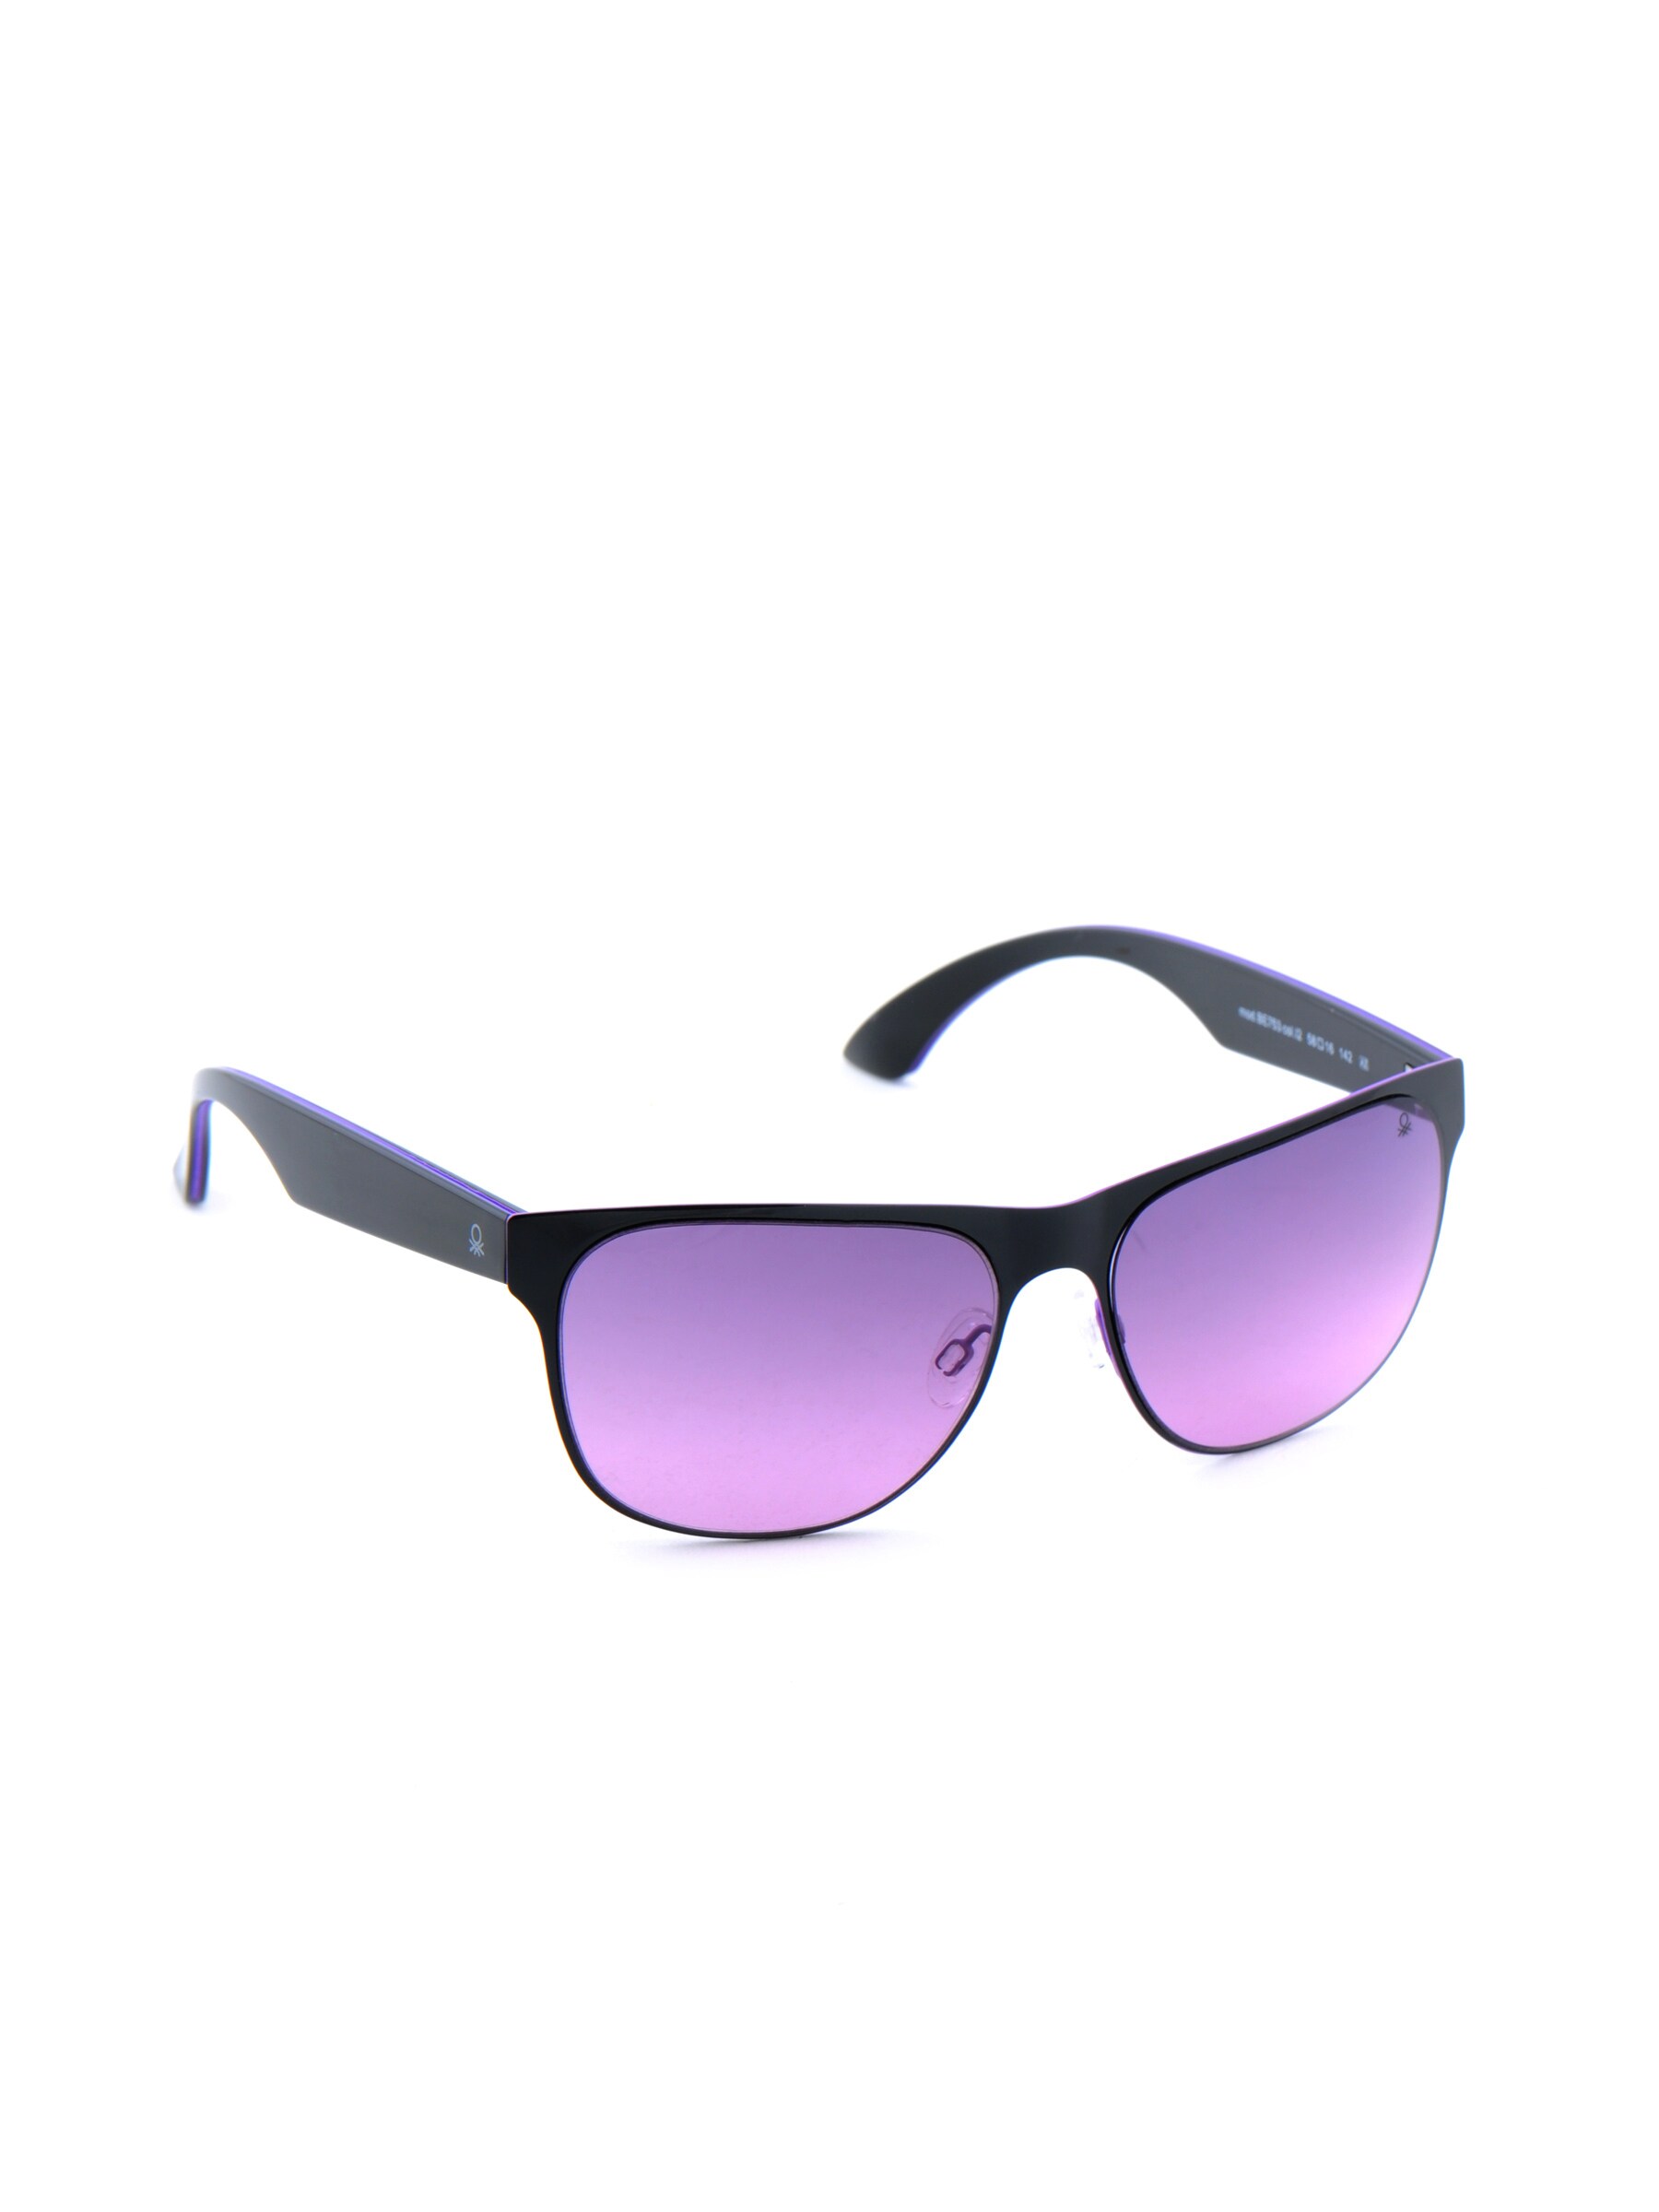 United Colors of Benetton Women Funky Eyewear Purple Sunglasses